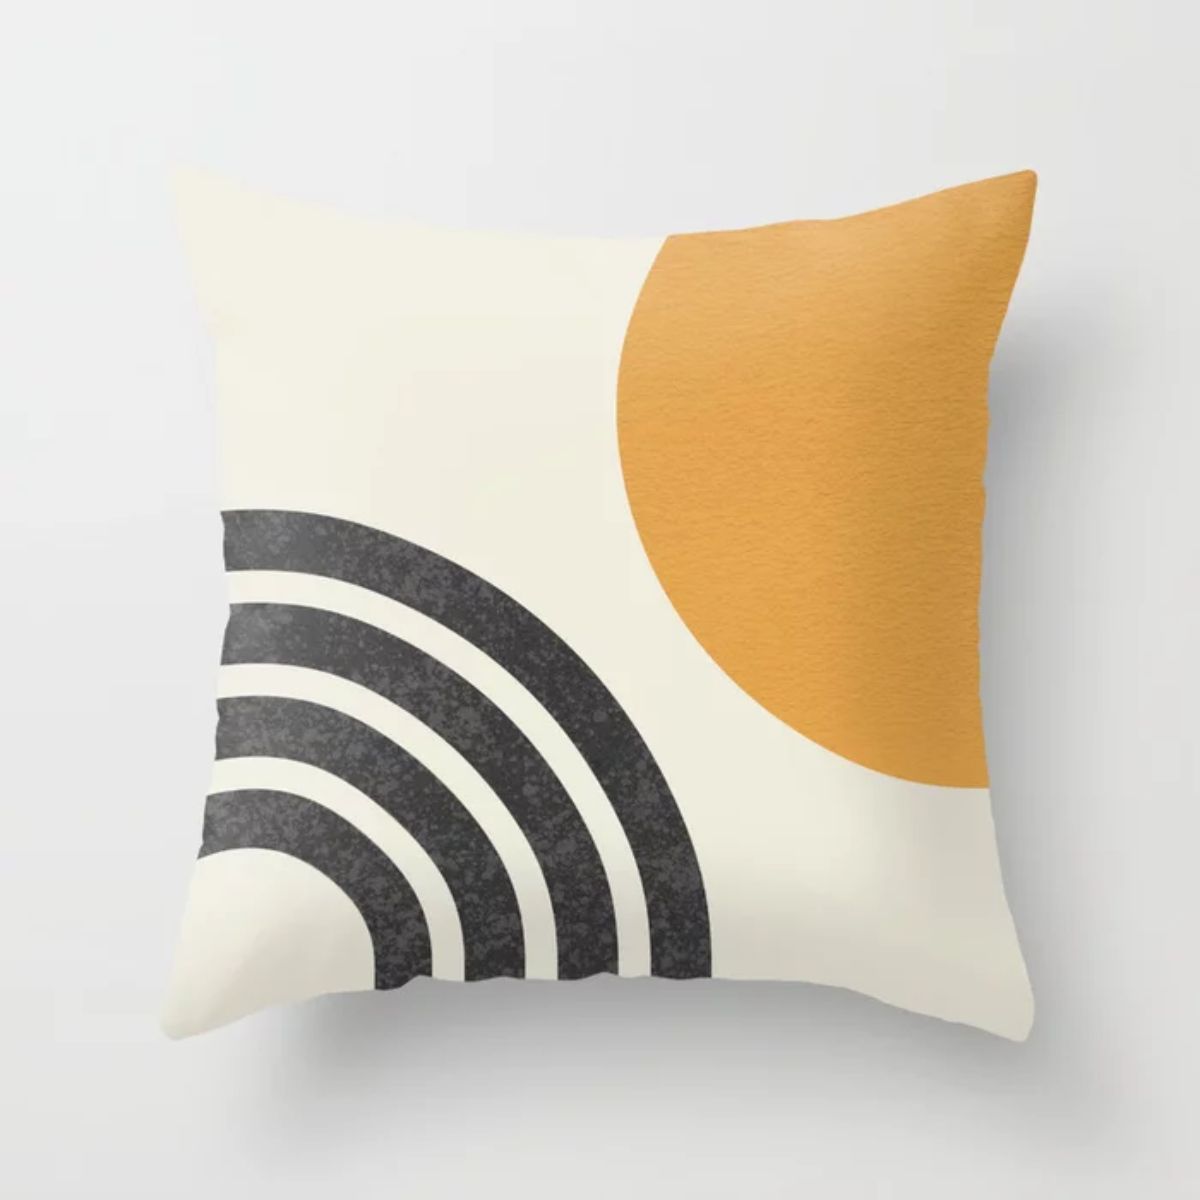 Minimalist Throw Pillows to Match Any Decor